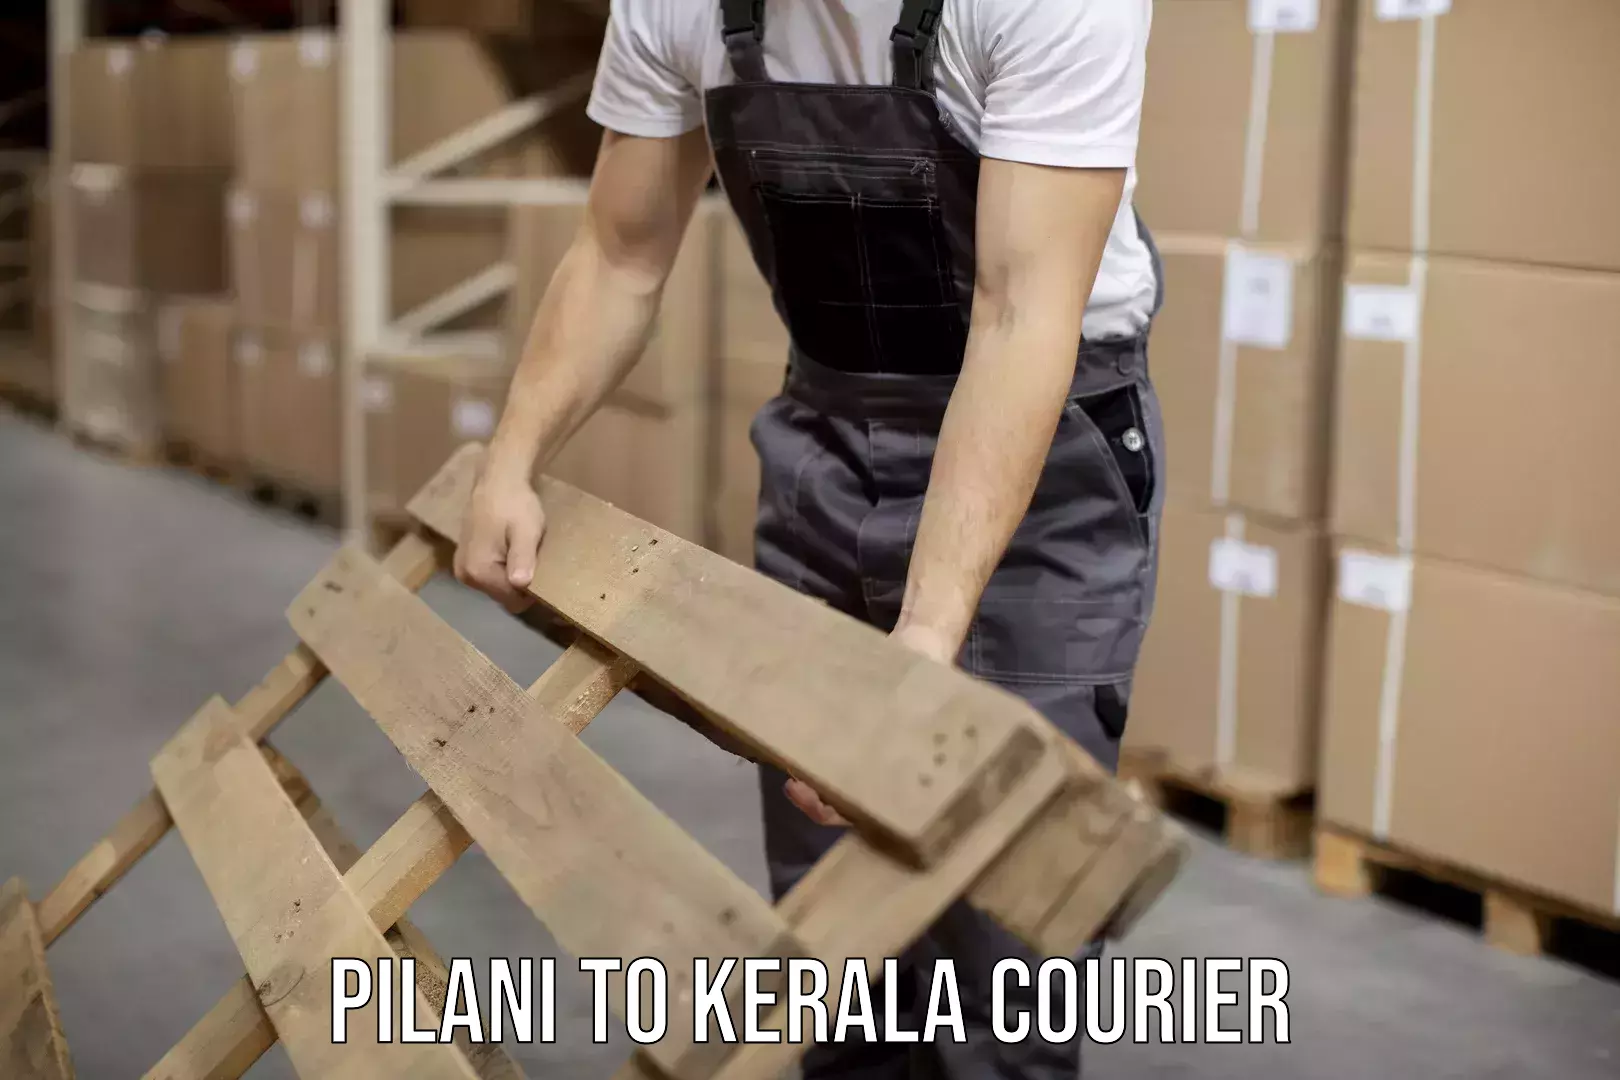 Urgent courier needs Pilani to Kerala